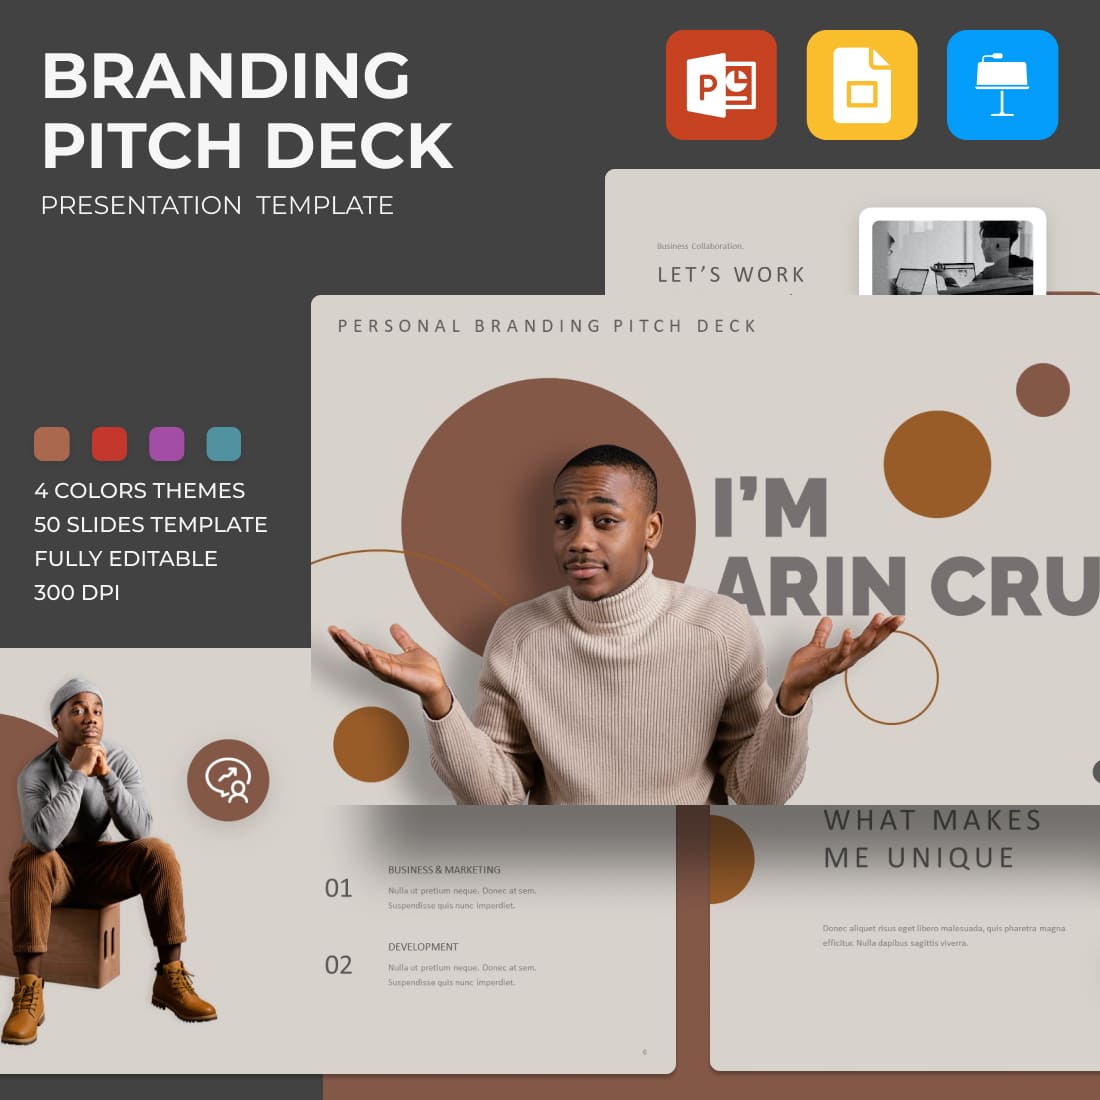 Branding Pitch Deck Presentation Template.